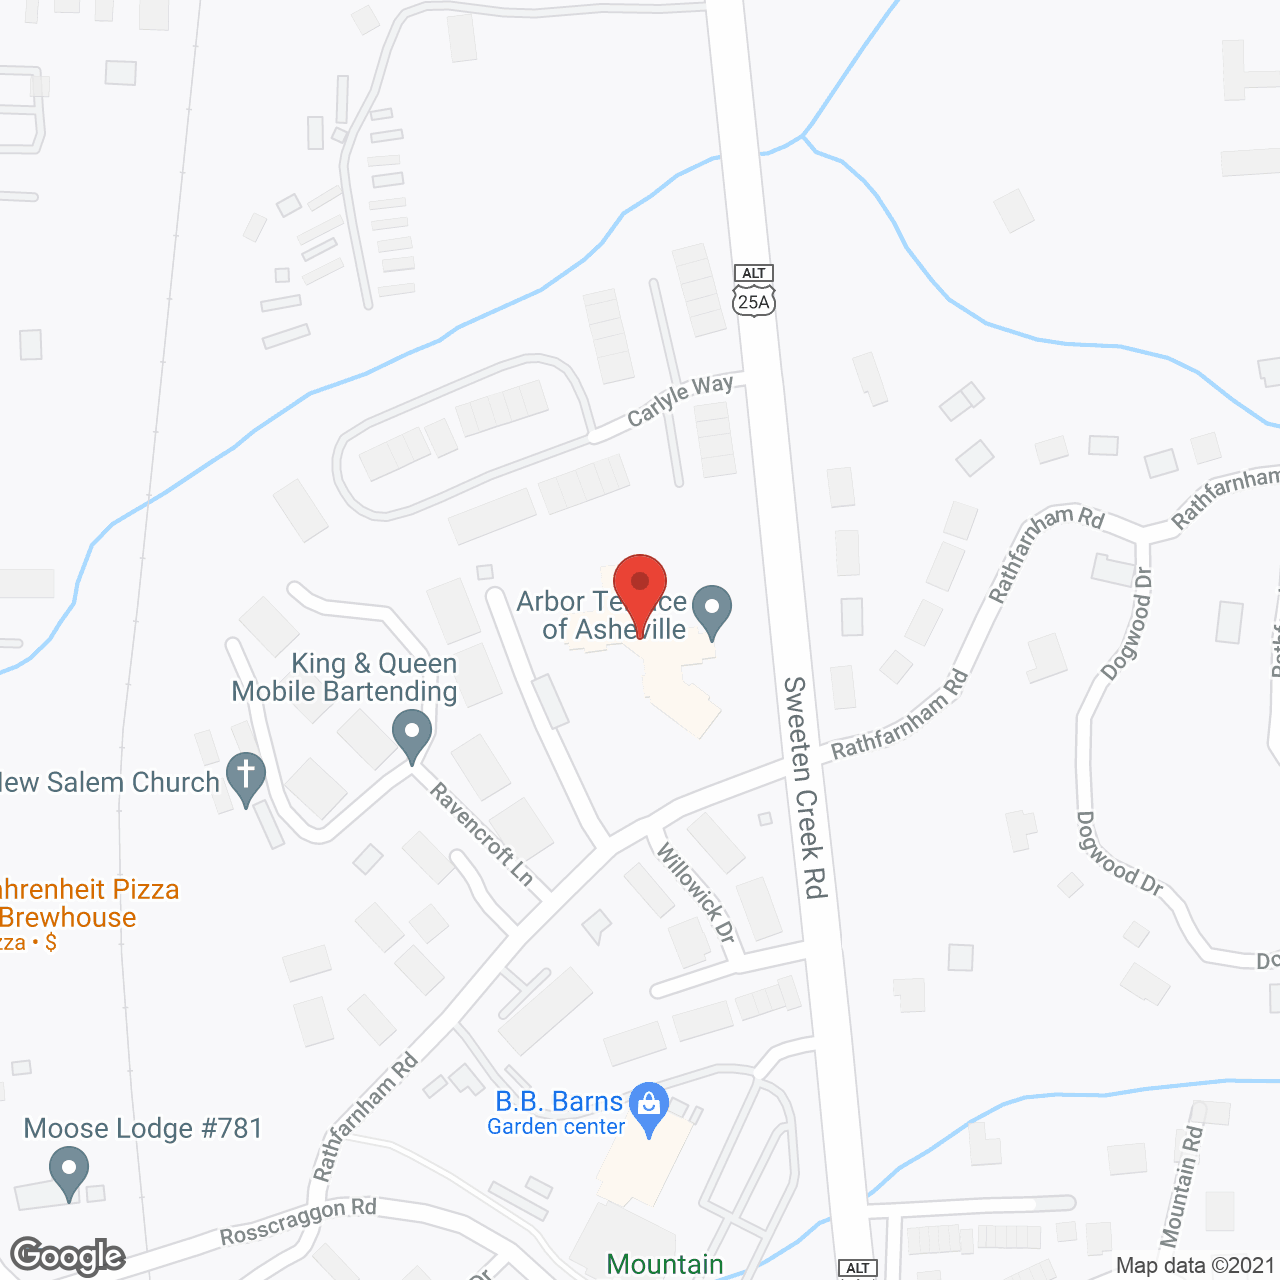 Arbor Terrace of Asheville in google map